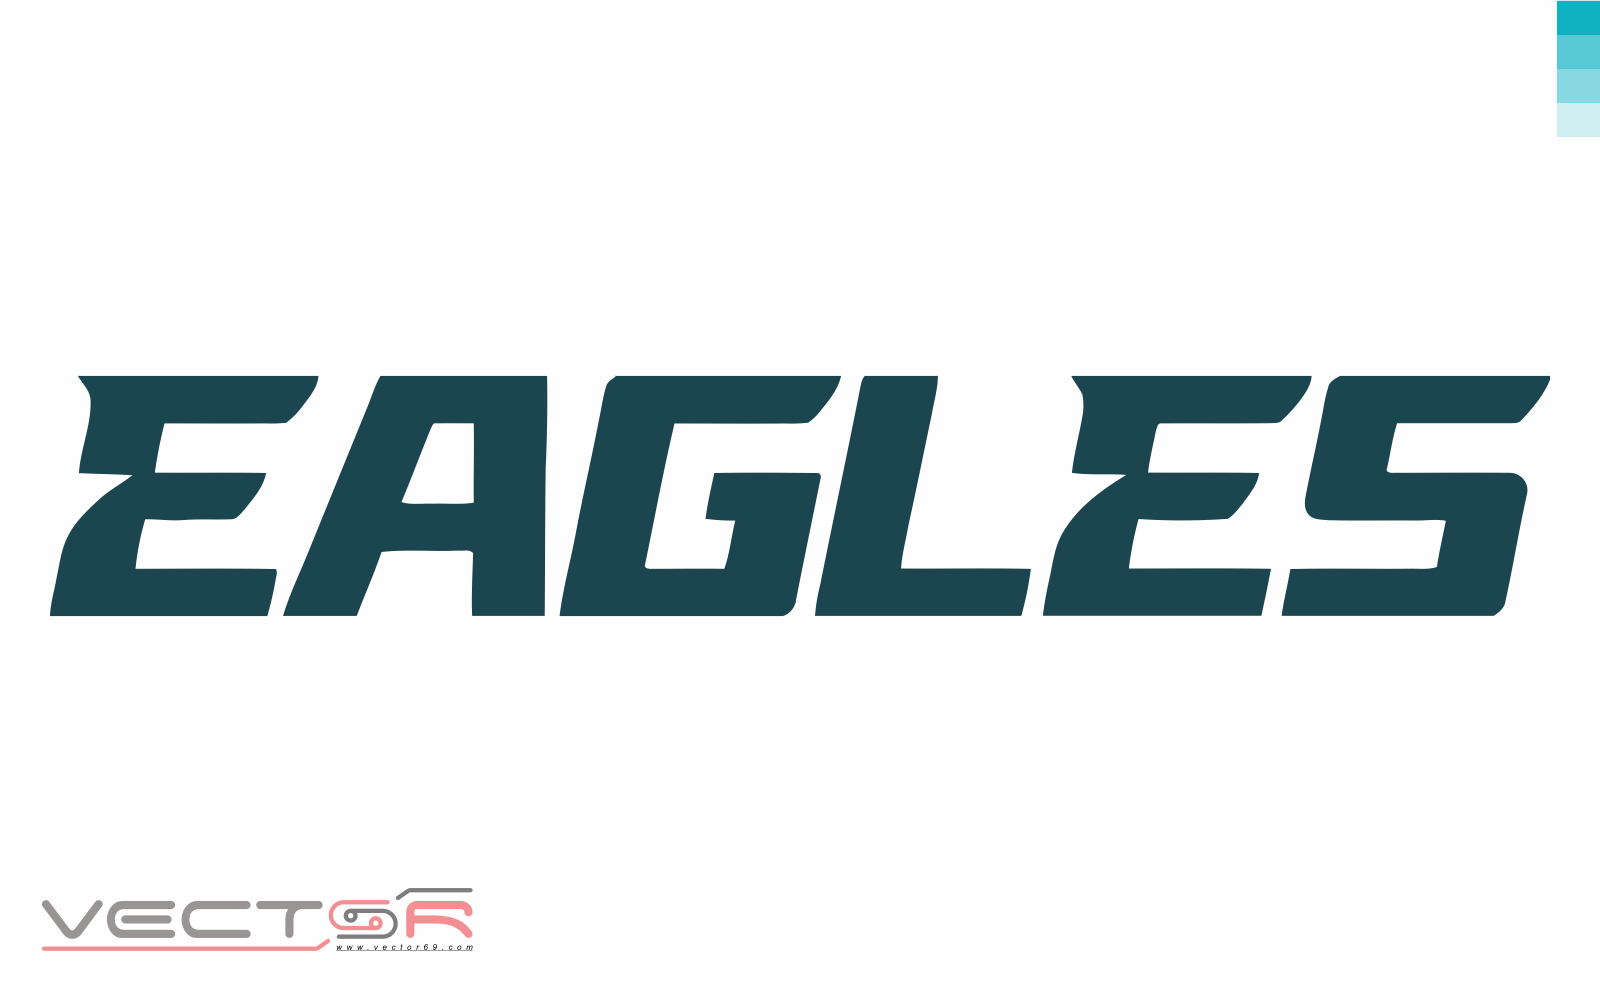 Philadelphia Eagles Wordmark (2022-present) - Download Vector File SVG (Scalable Vector Graphics)